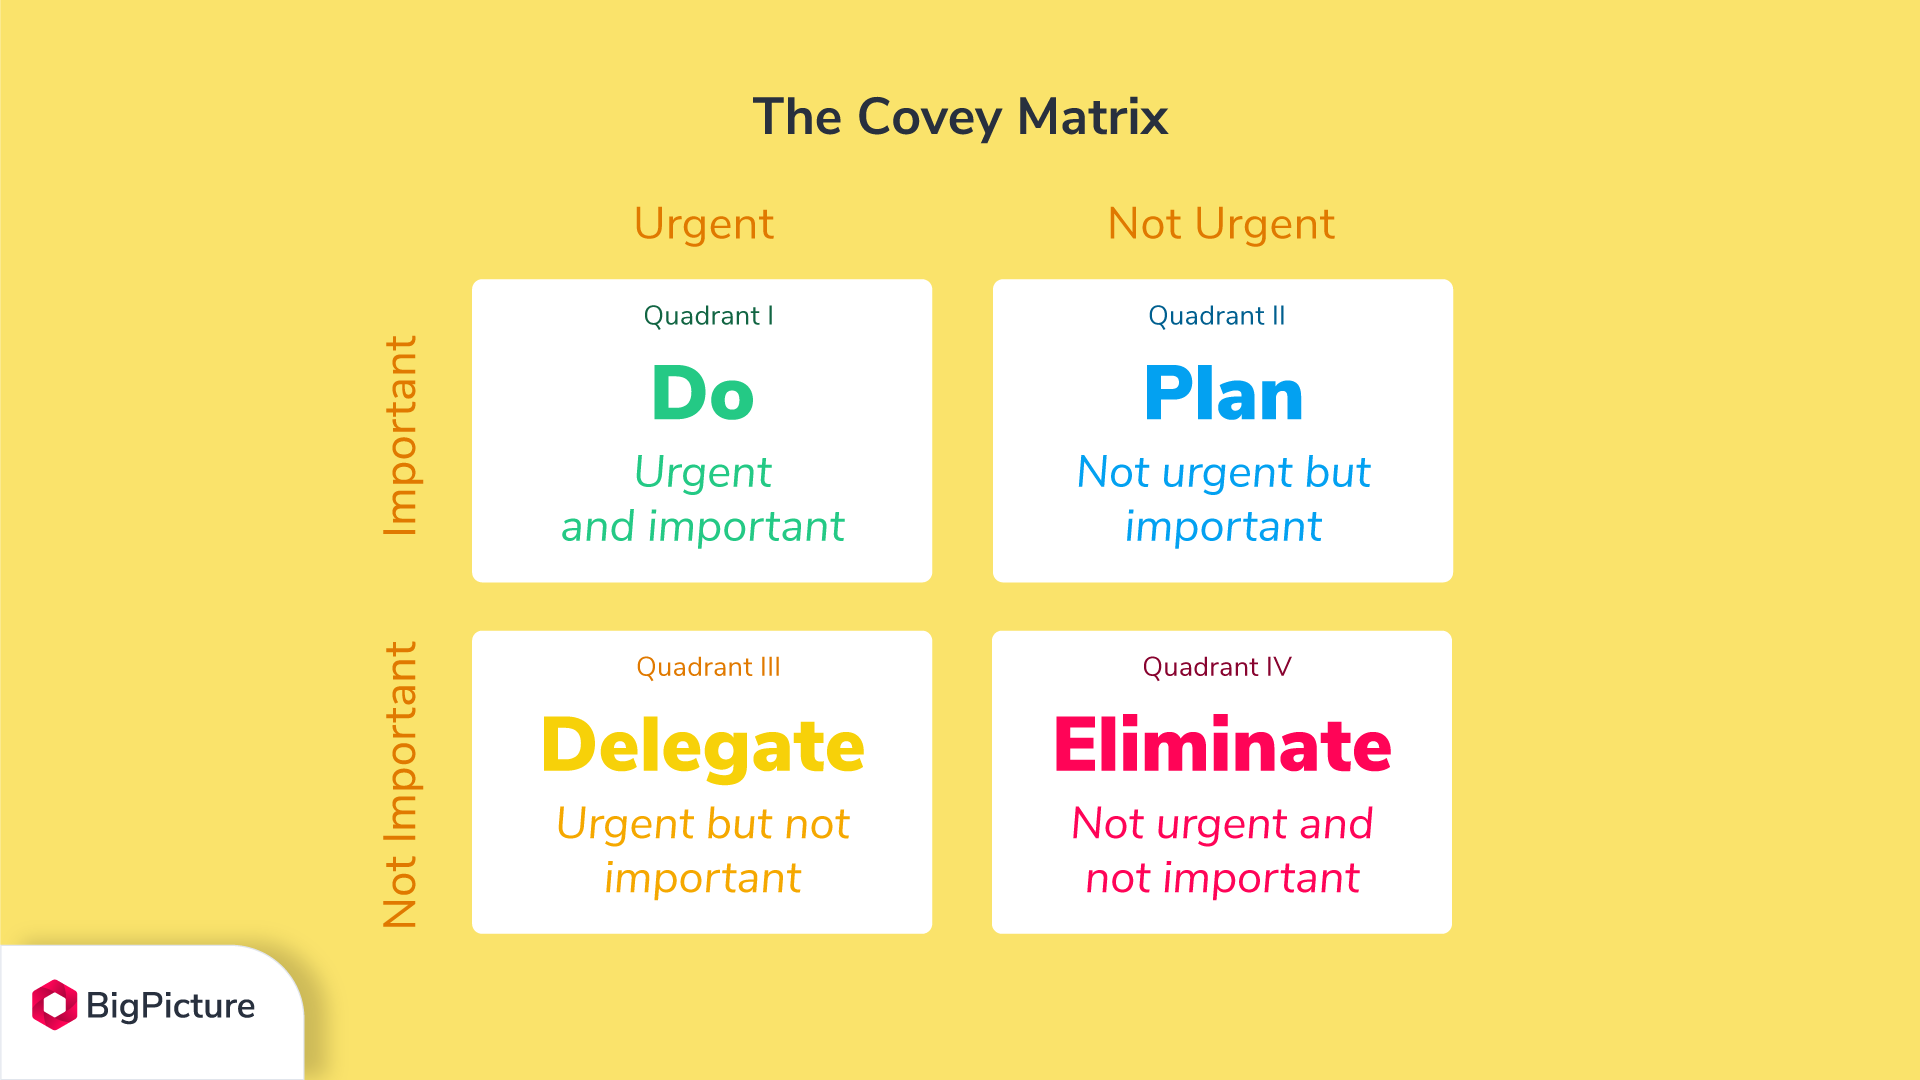 The Covey matrix